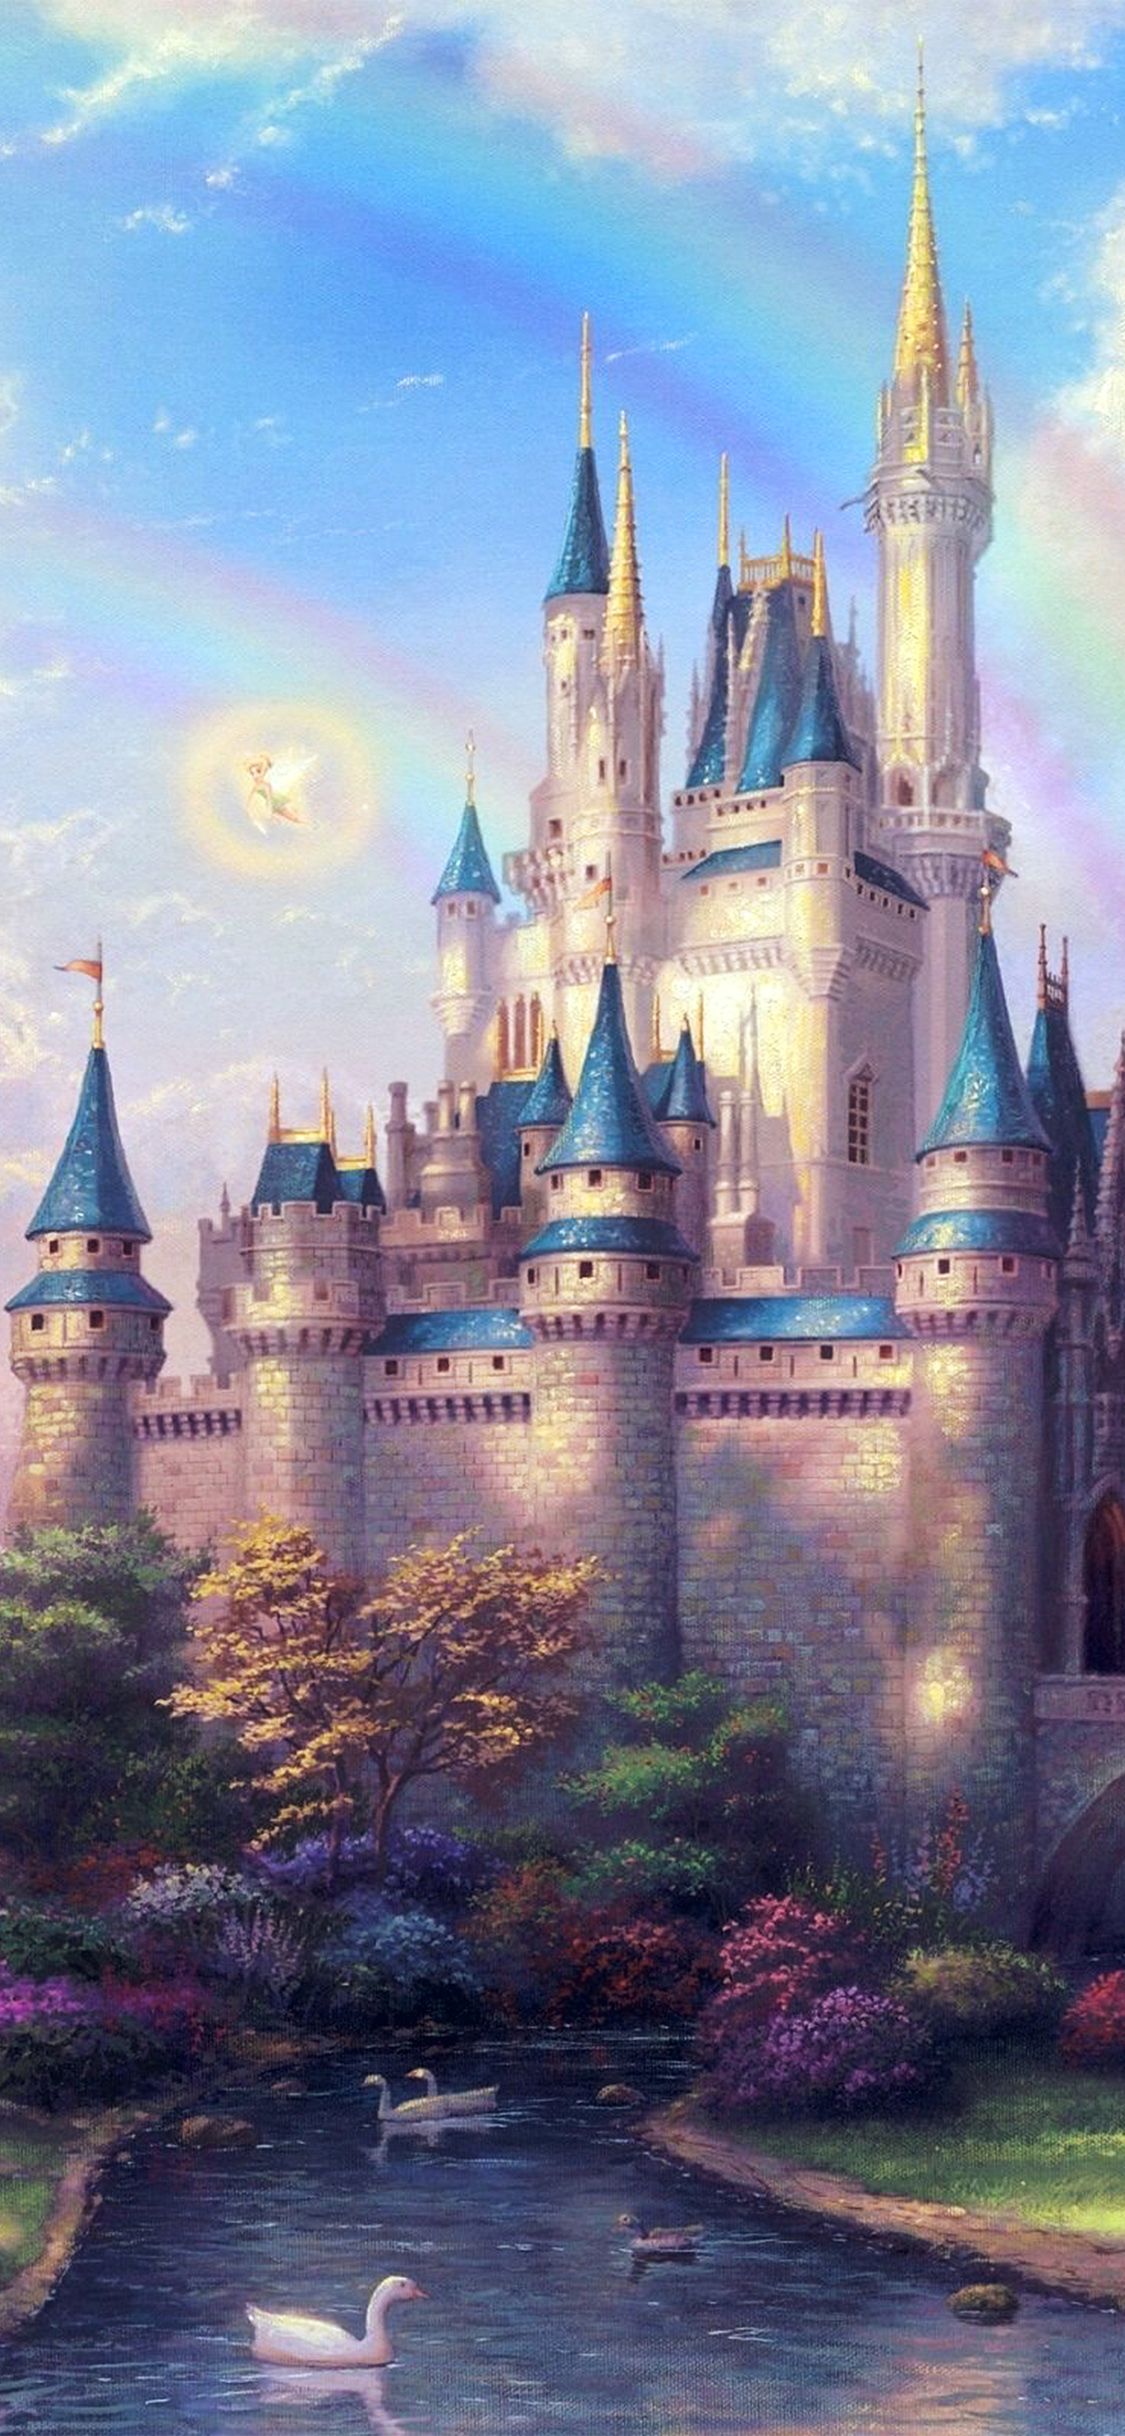 iPhone X wallpaper. fantasy castle illustration cute disney